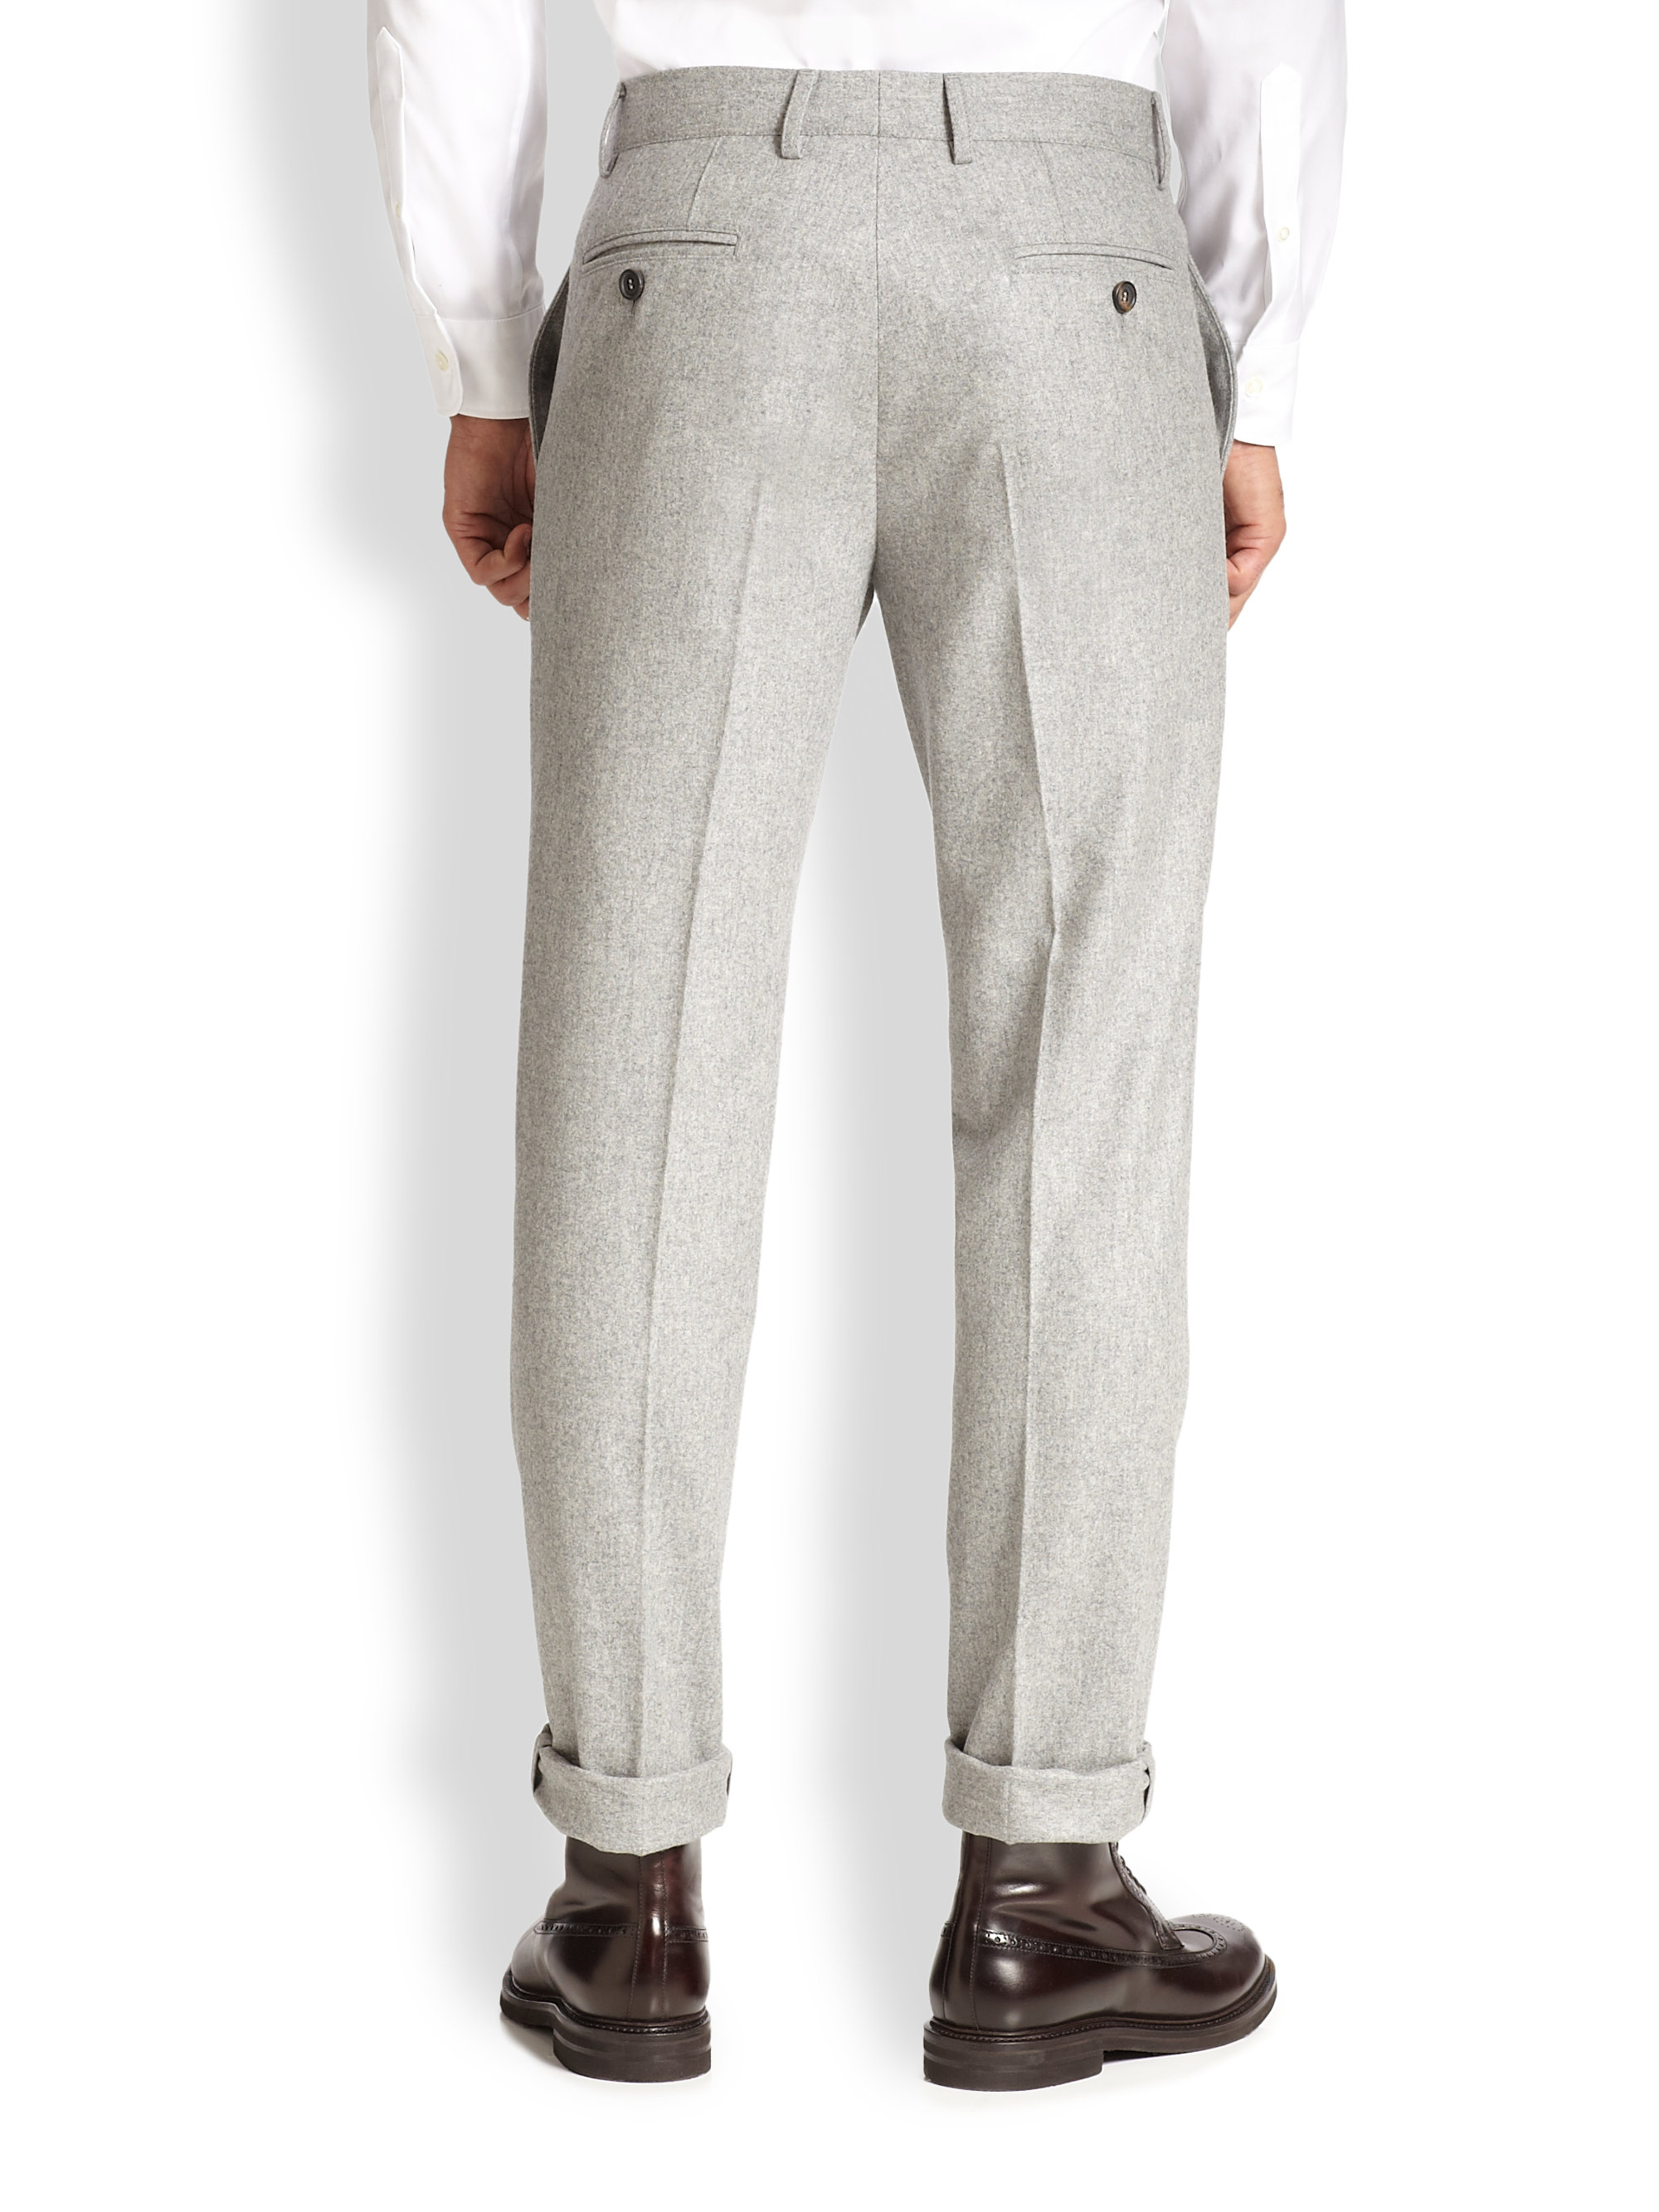 Brunello Cucinelli Wool Flannel Trousers in Gray for Men - Lyst